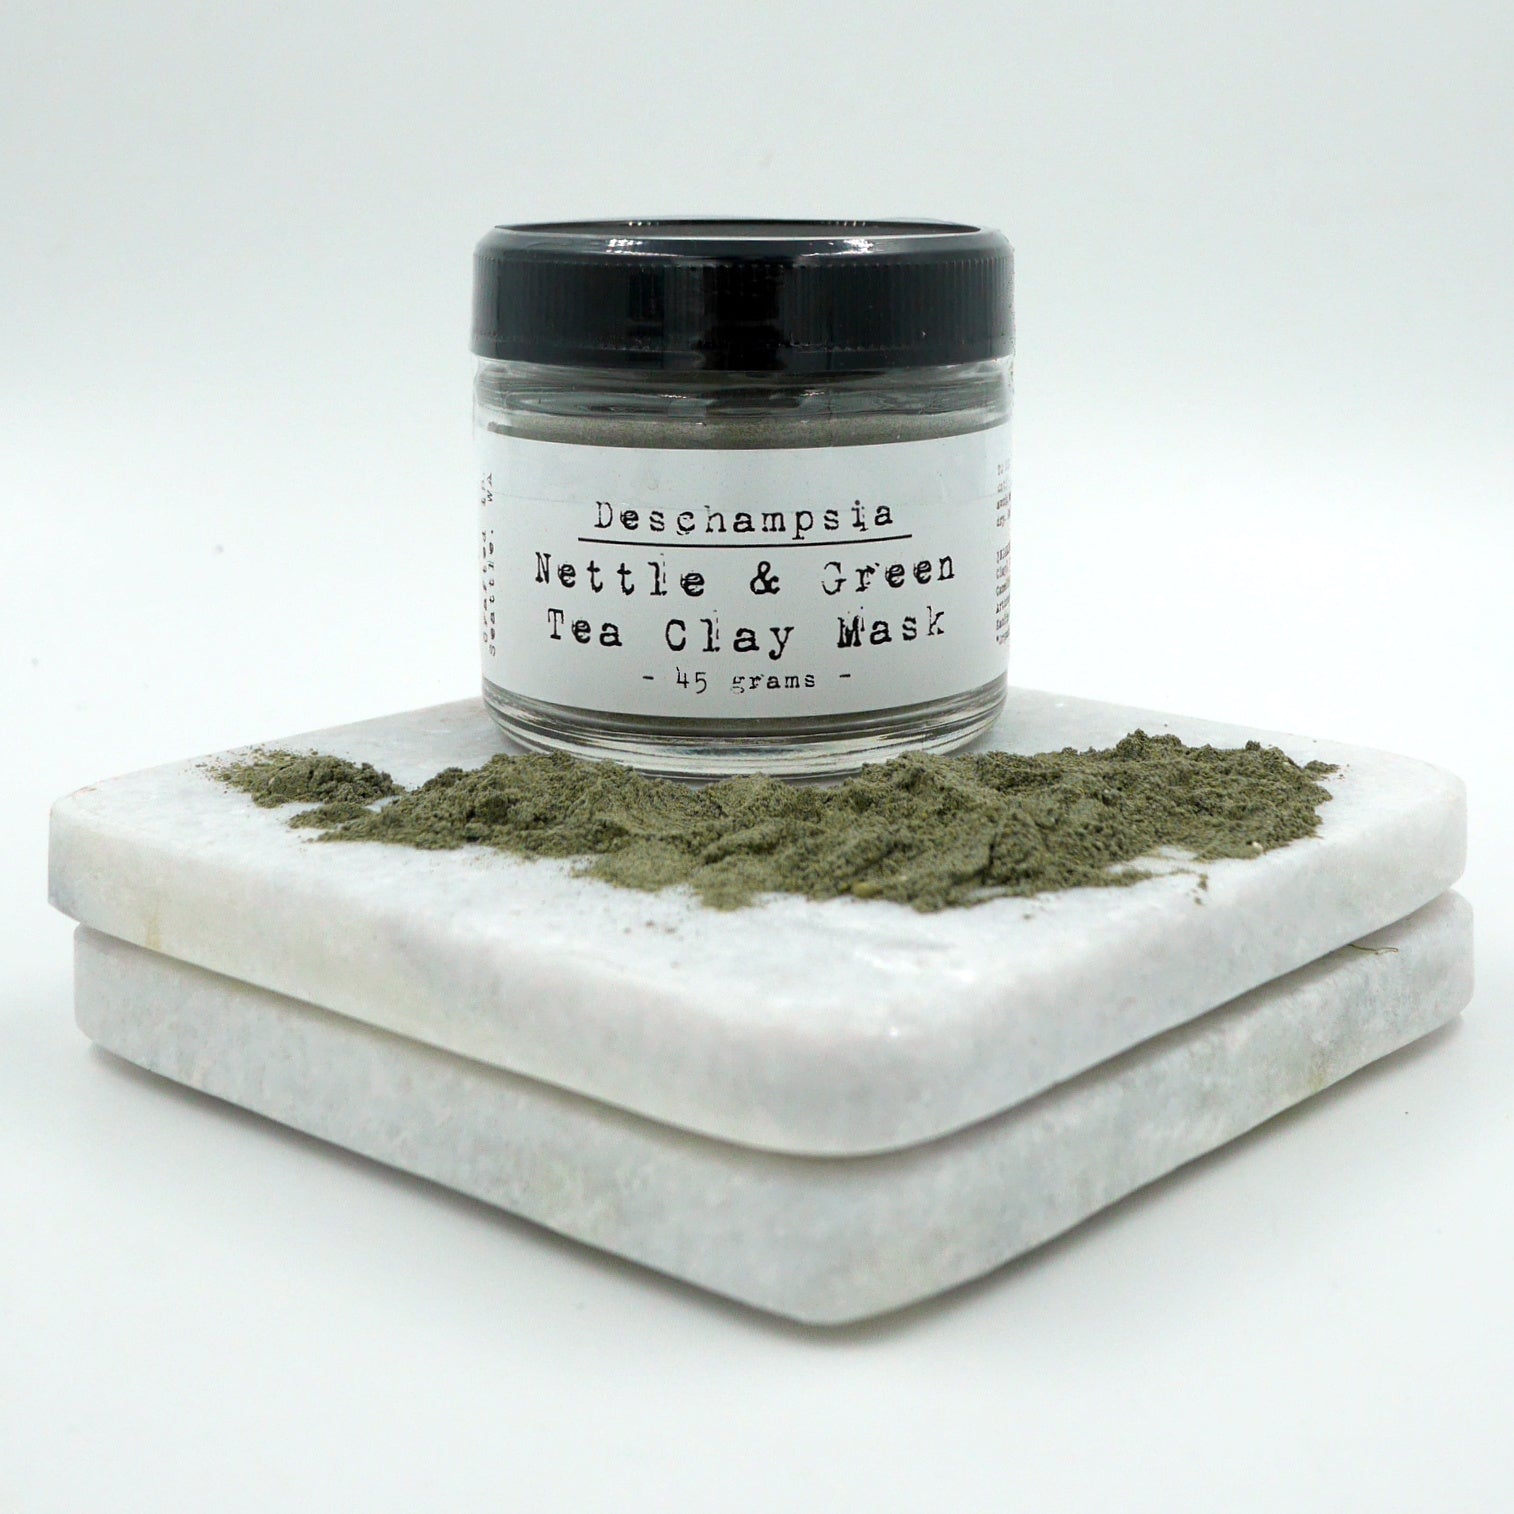 Nettle & Green Tea Clay Mask - Deschampsia - Nature Based Self Care